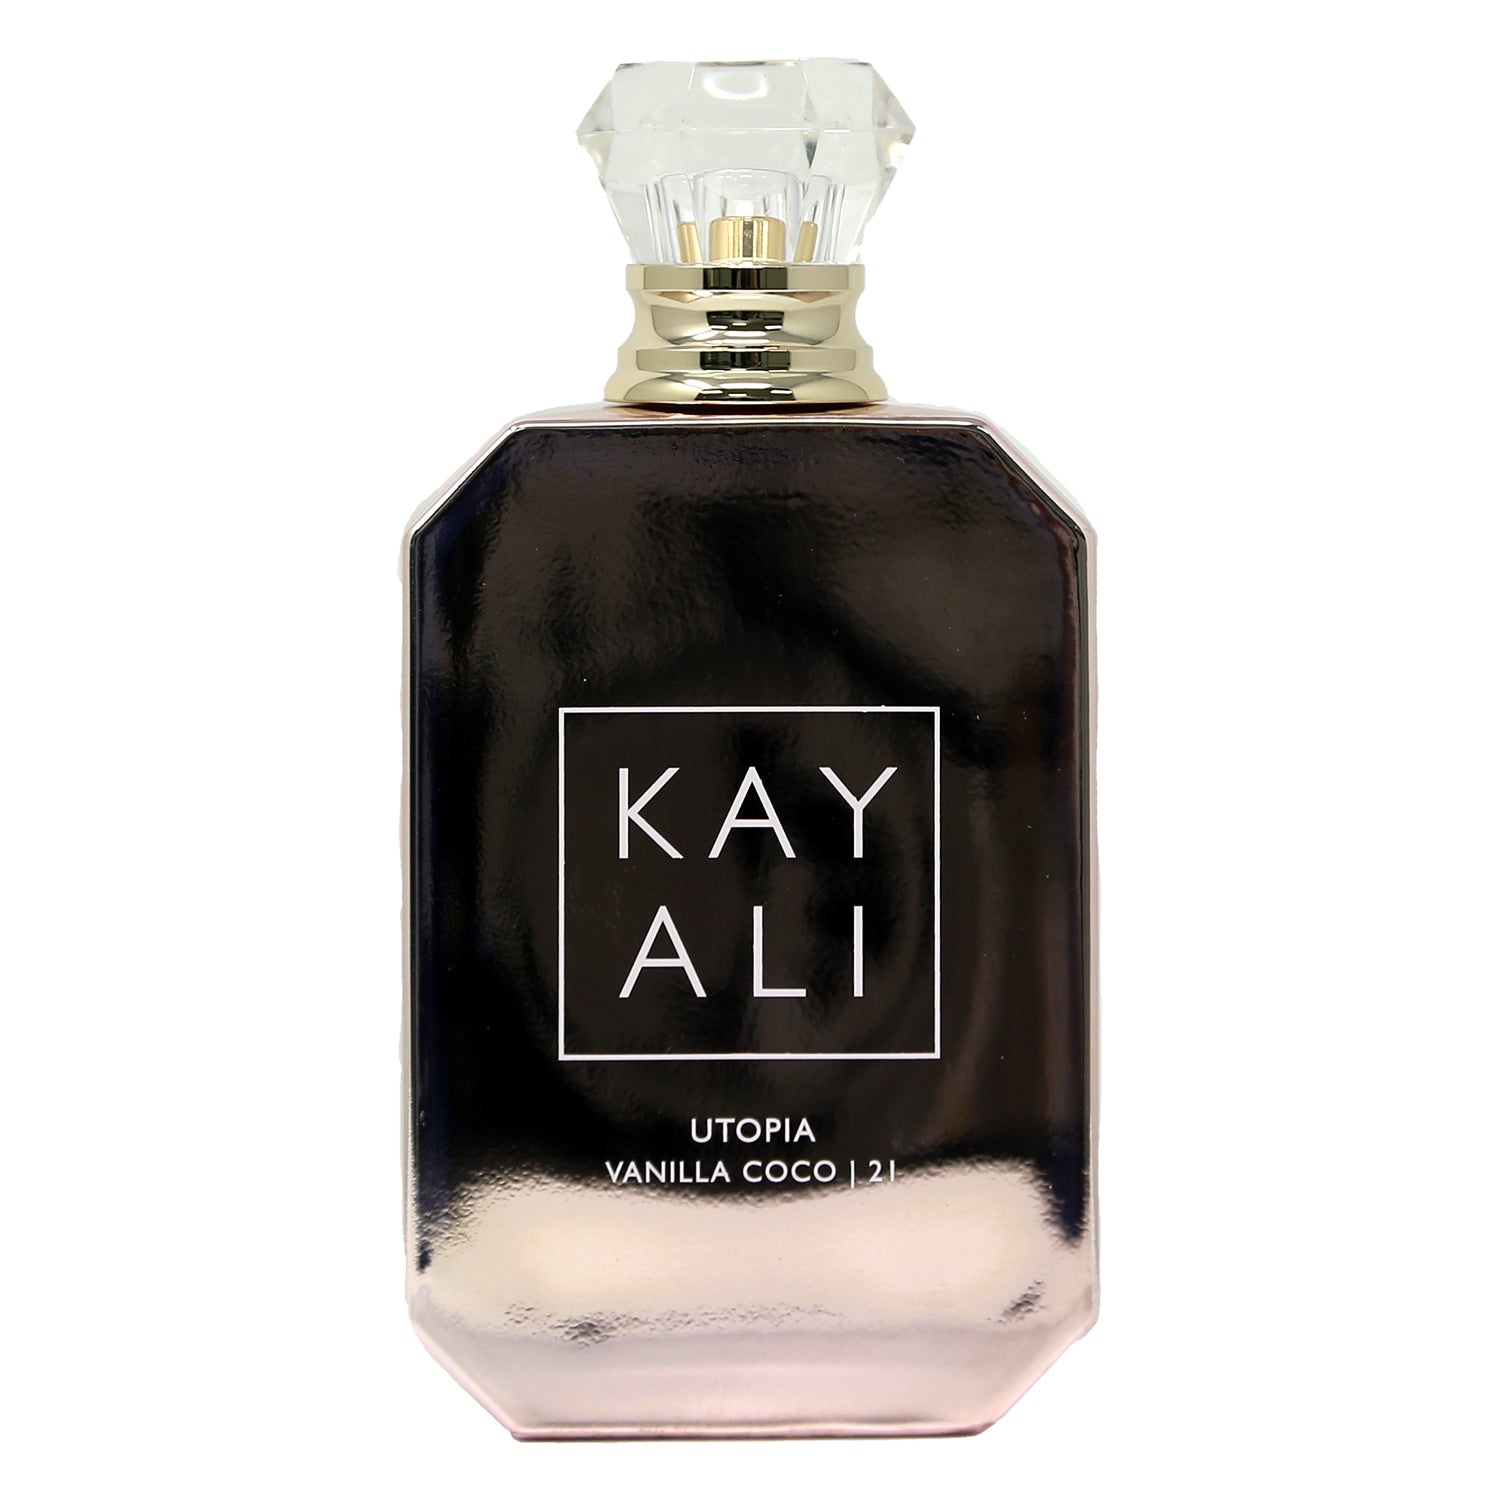 Huda Kayali Utopia Vanilla Coco 21 EDP Mini Perfume Spray 10ml .34oz SEALED  NIB